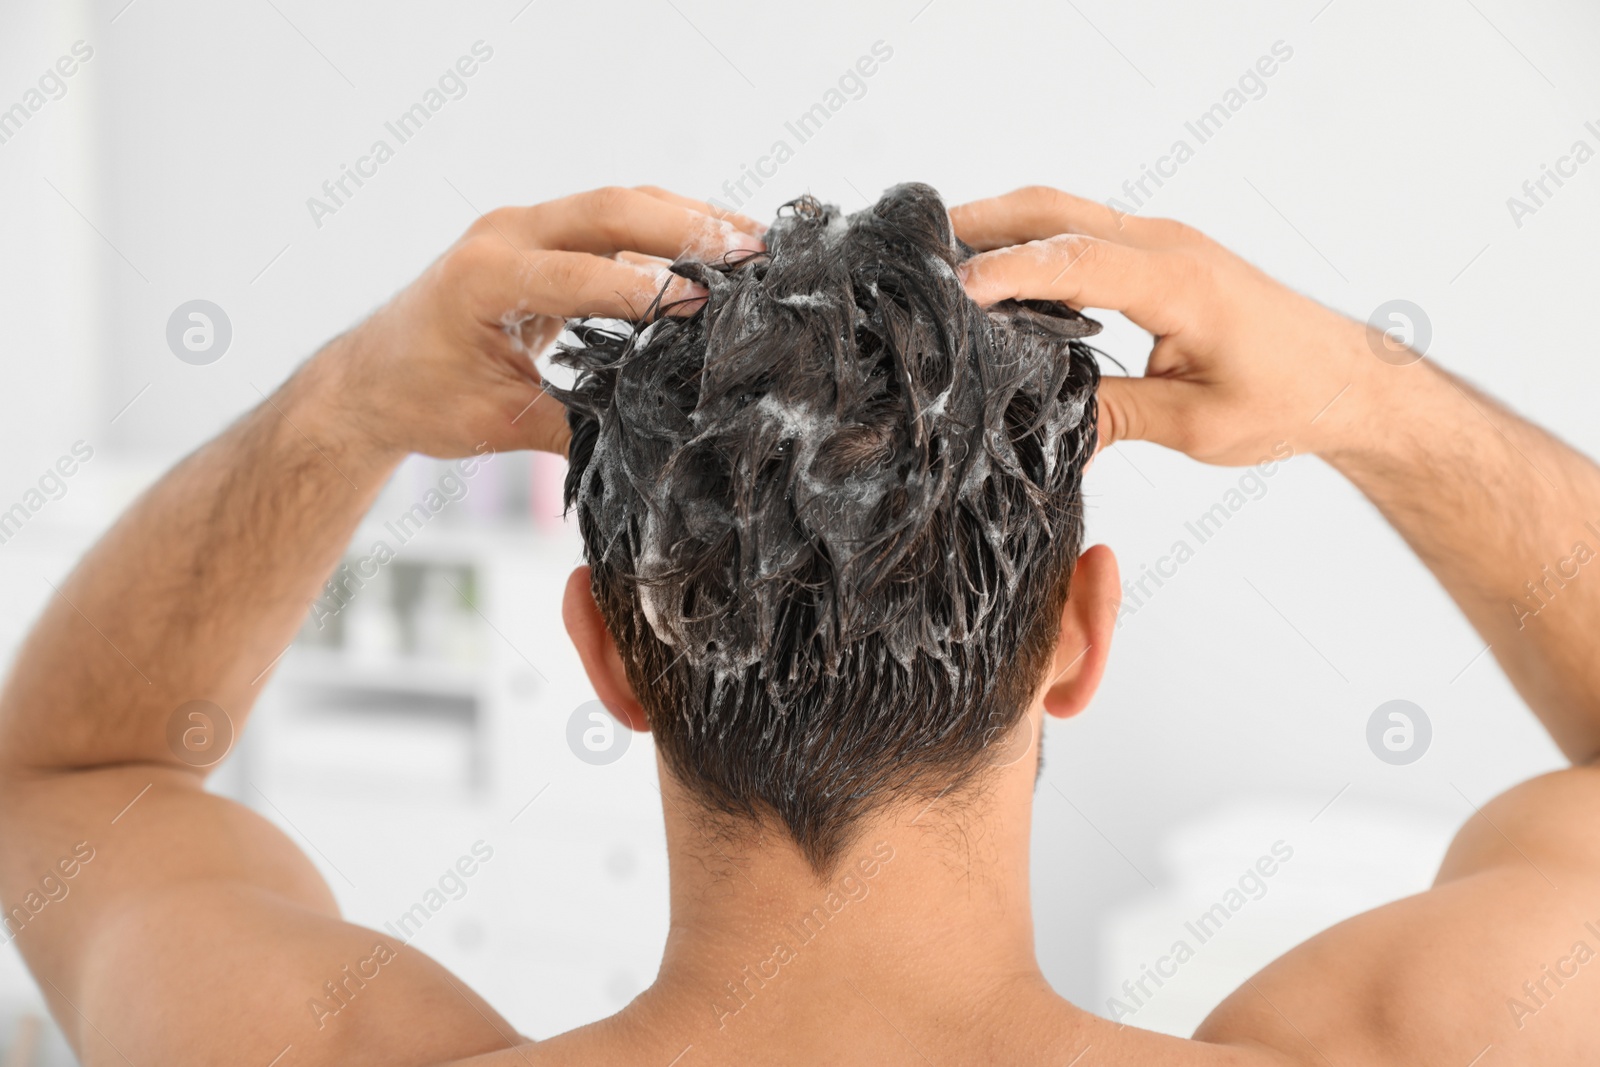 Photo of Man applying shampoo onto his hair against light background